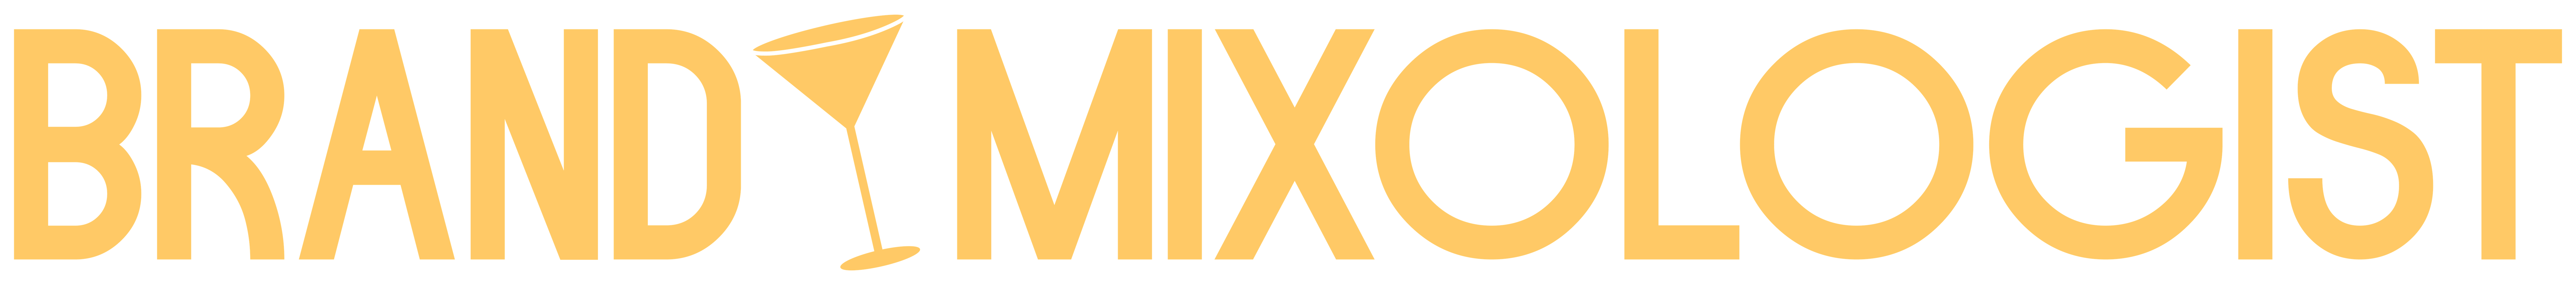 the brand mixologist principal logo yellow